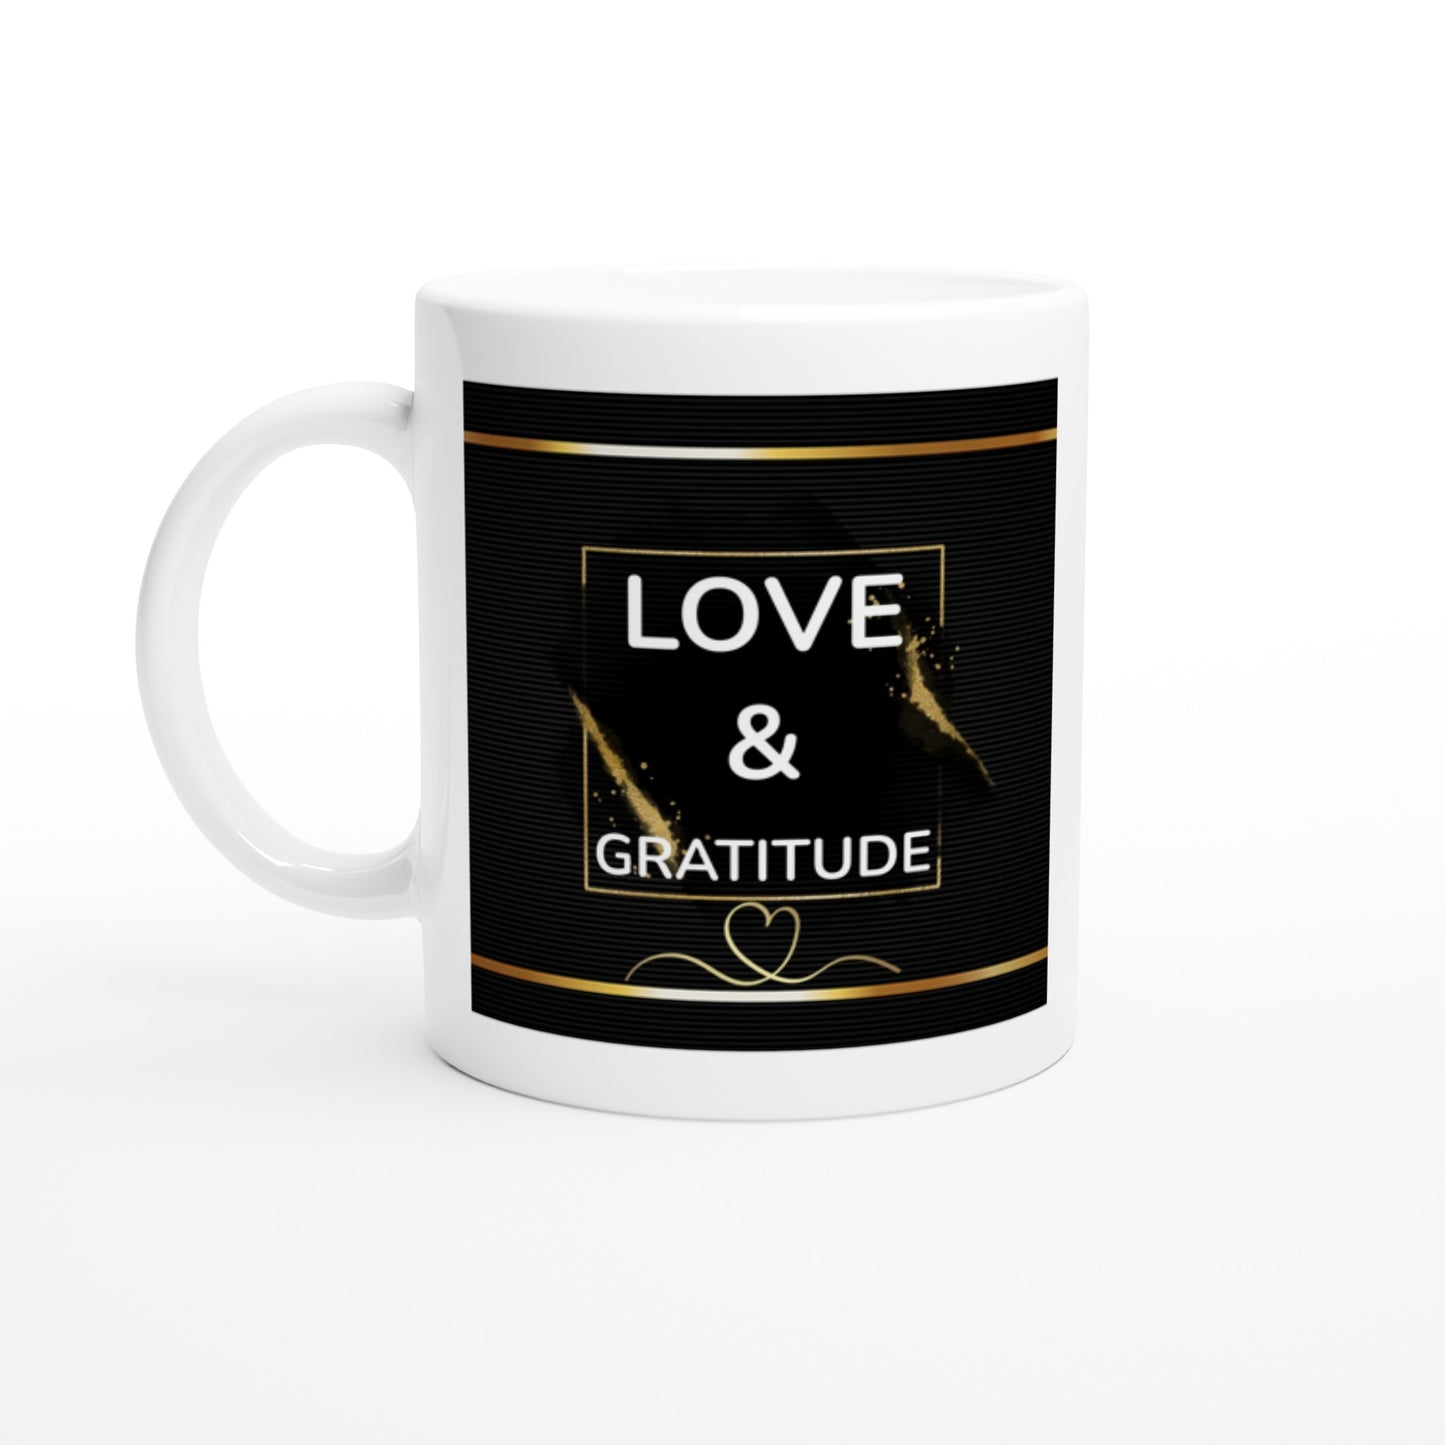 Love & Gratitude Ceramic Mug - Inspirational Powerful Words